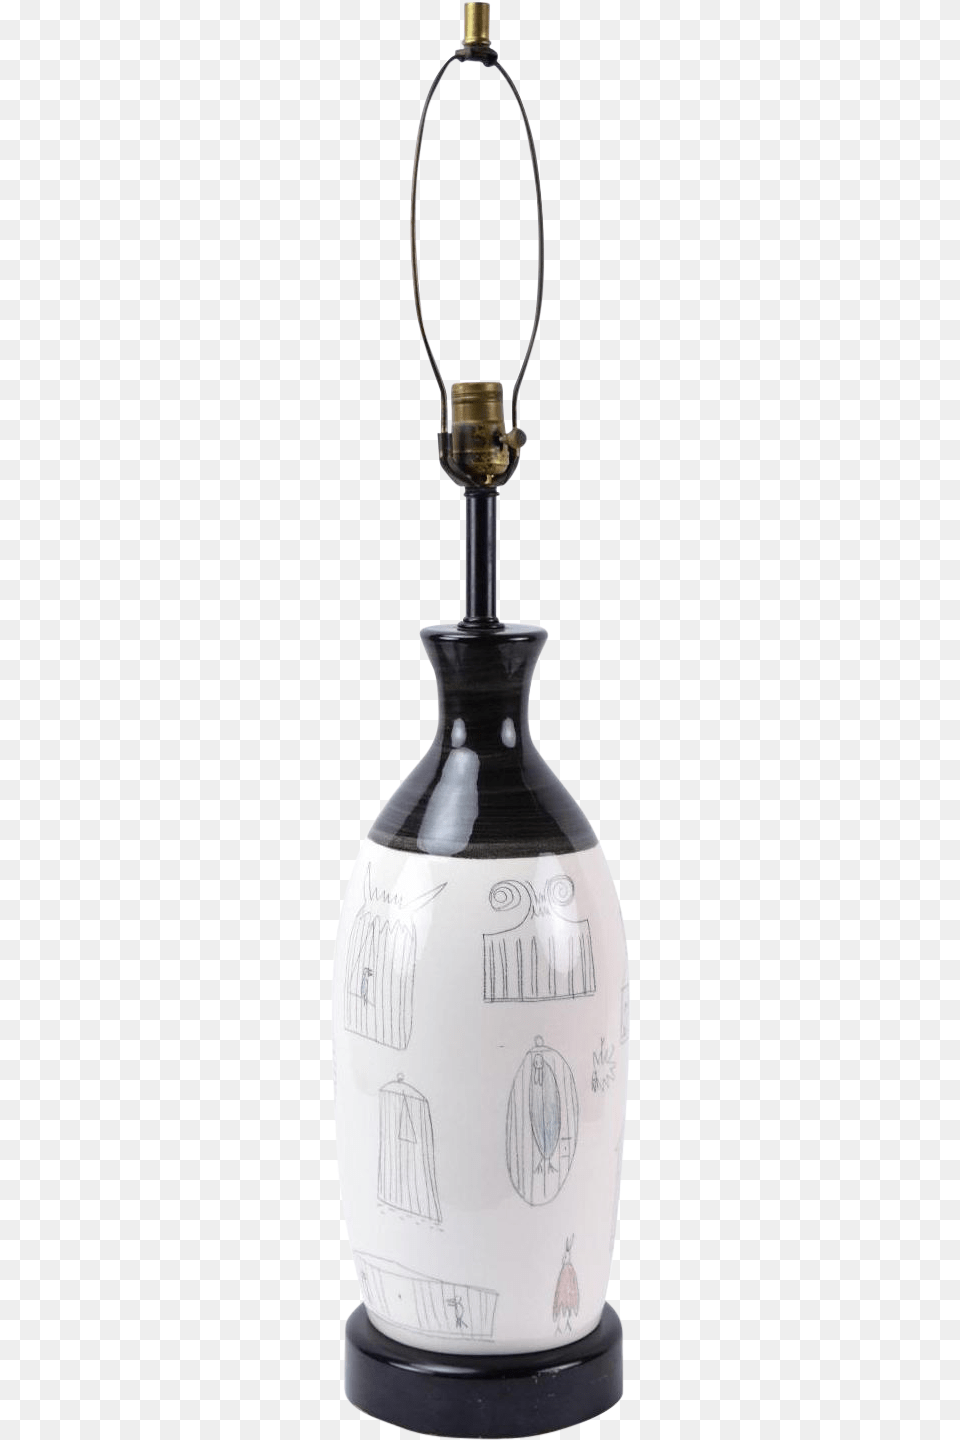 Vintage French M Wine Bottle, Lamp, Lantern, Art Png Image